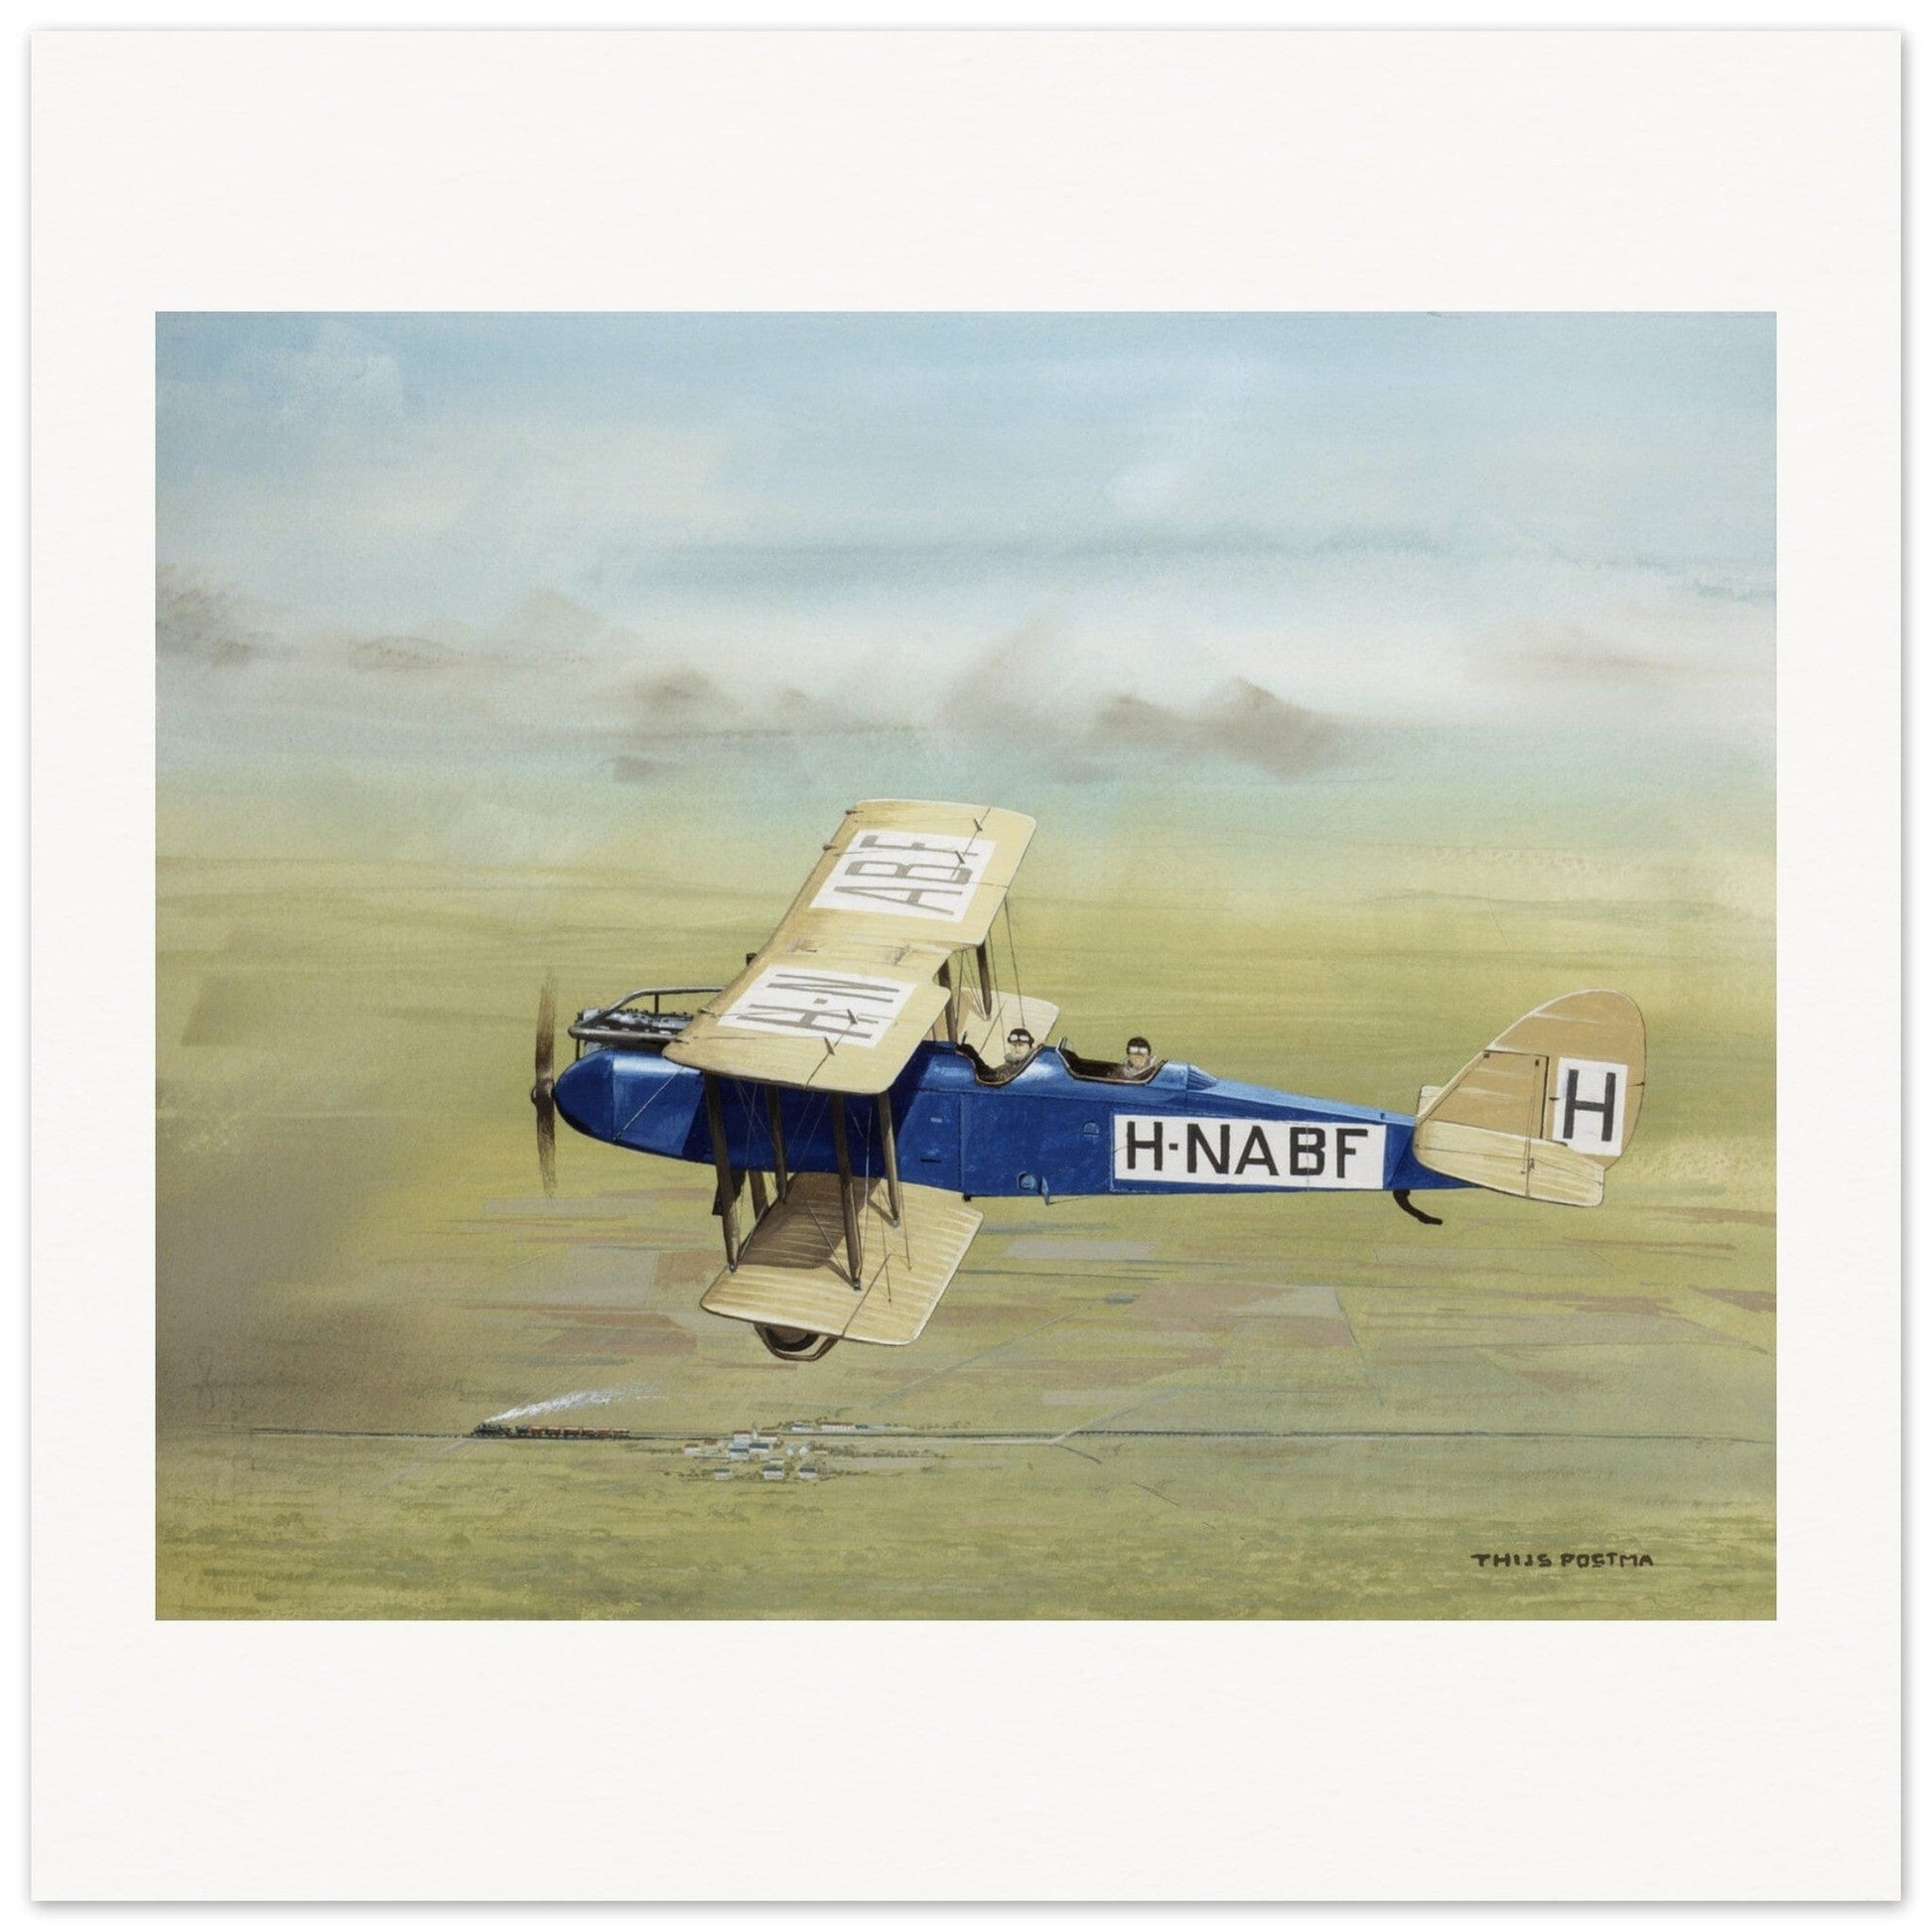 Thijs Postma - Poster - De Havilland DH.9 Over Railroad Tracks Poster Only TP Aviation Art 50x50 cm / 20x20″ 